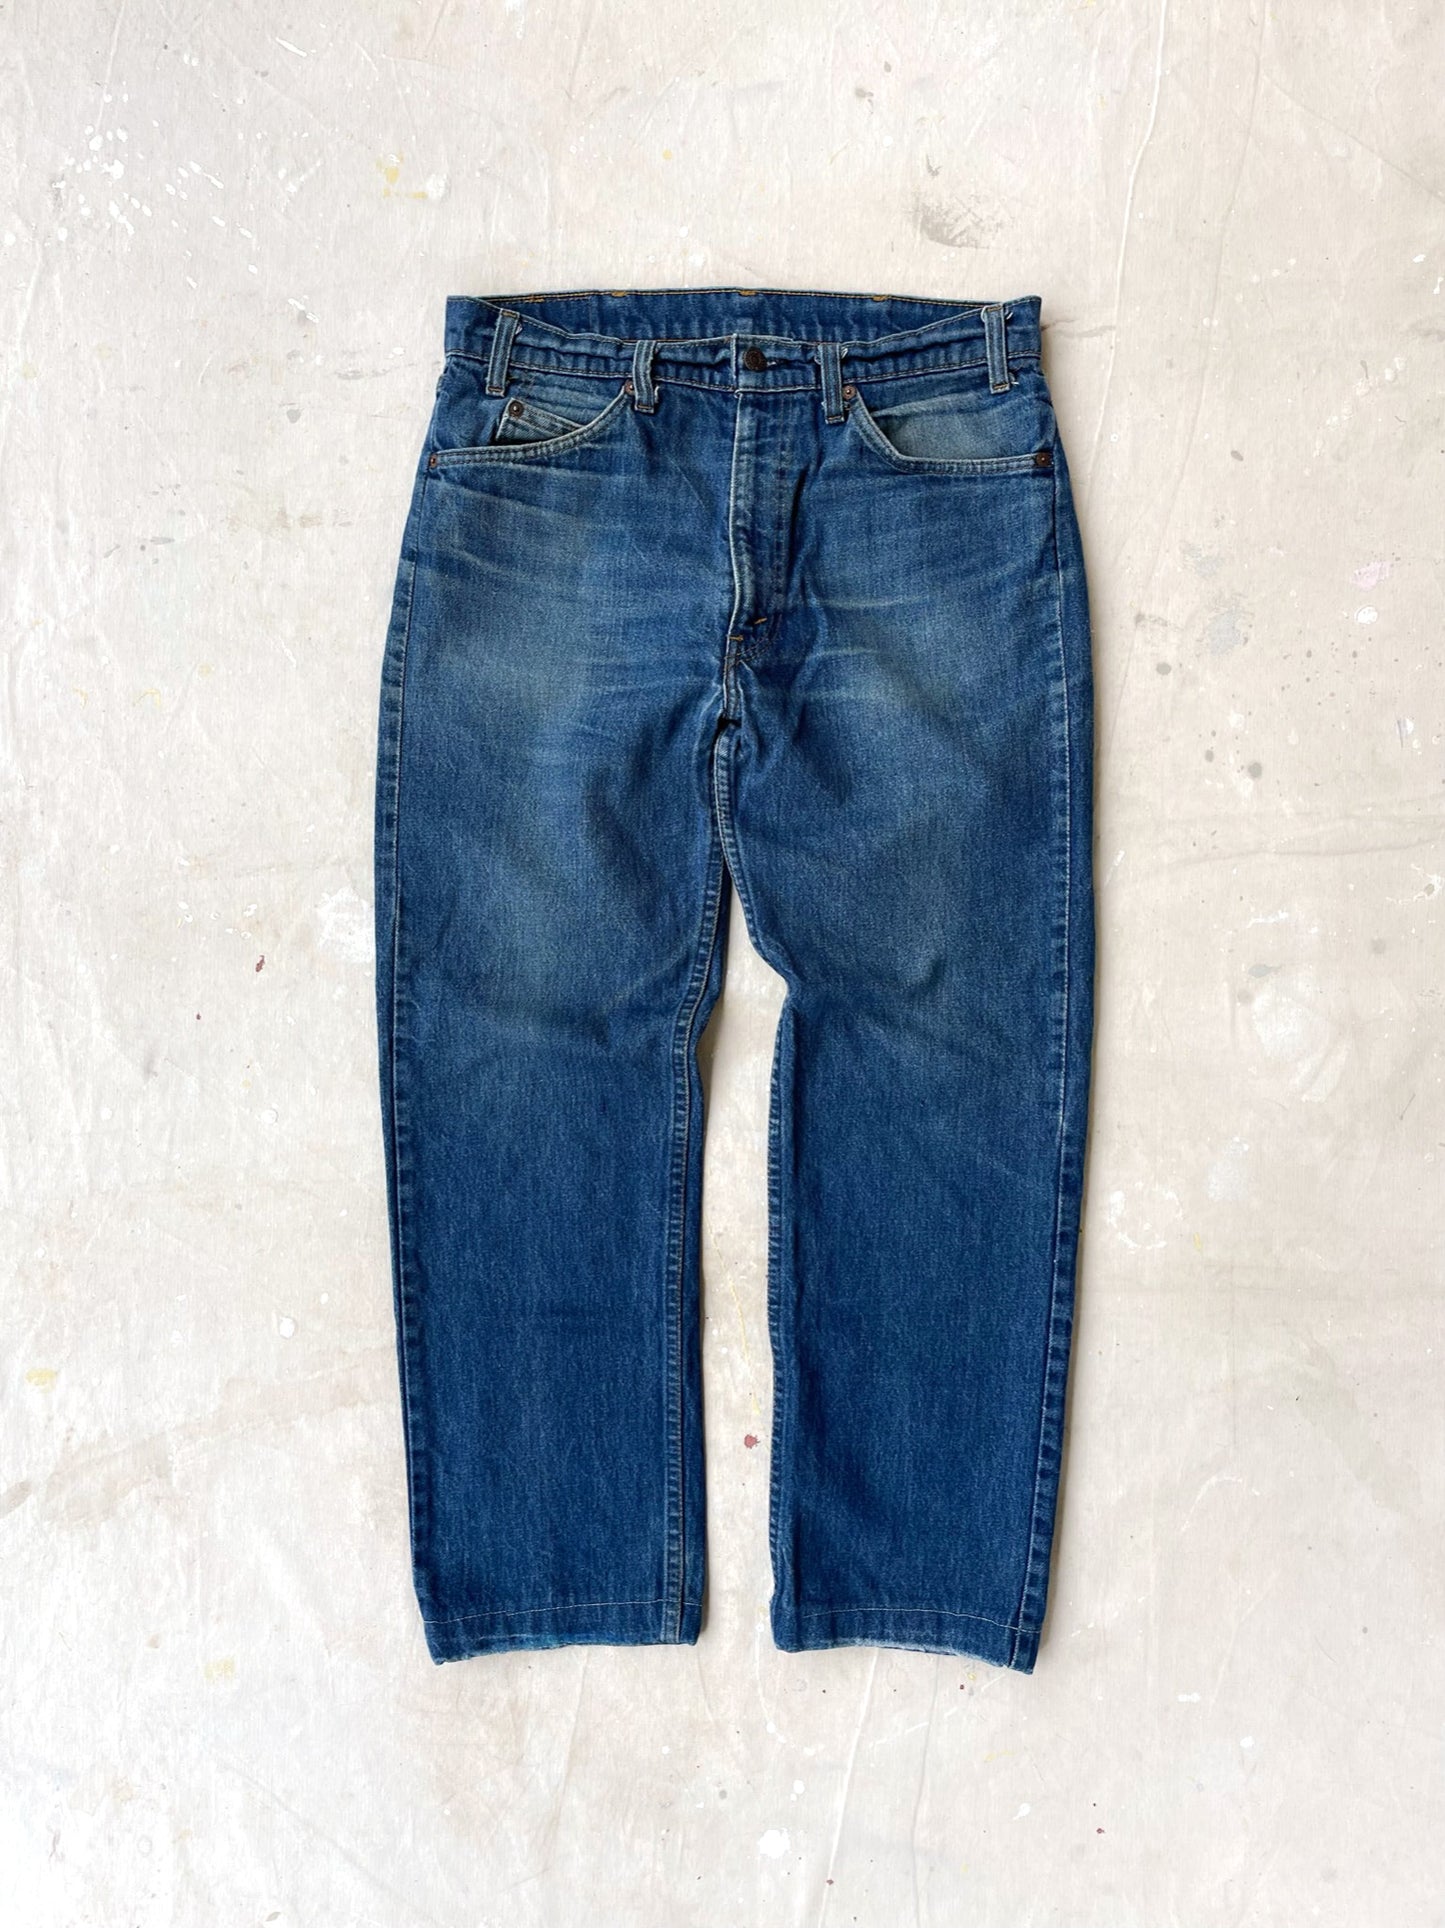 Levi's 505 Orange Tab Jeans—[32x28]